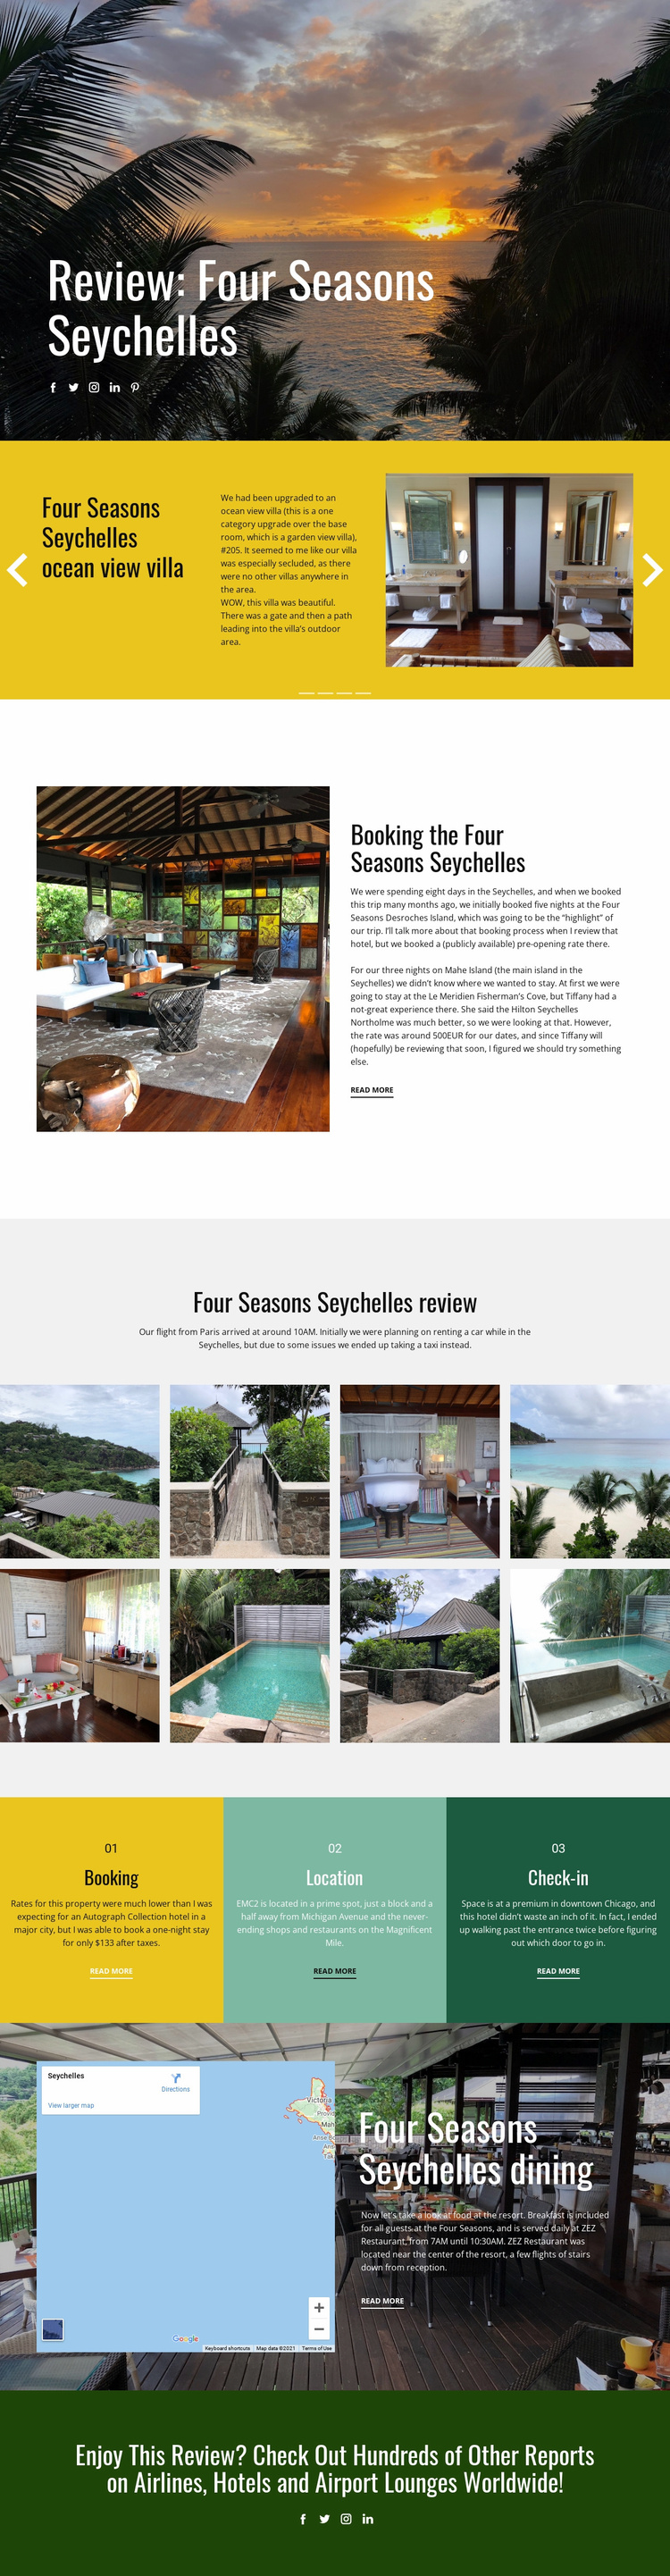 Four Seasons Website Template